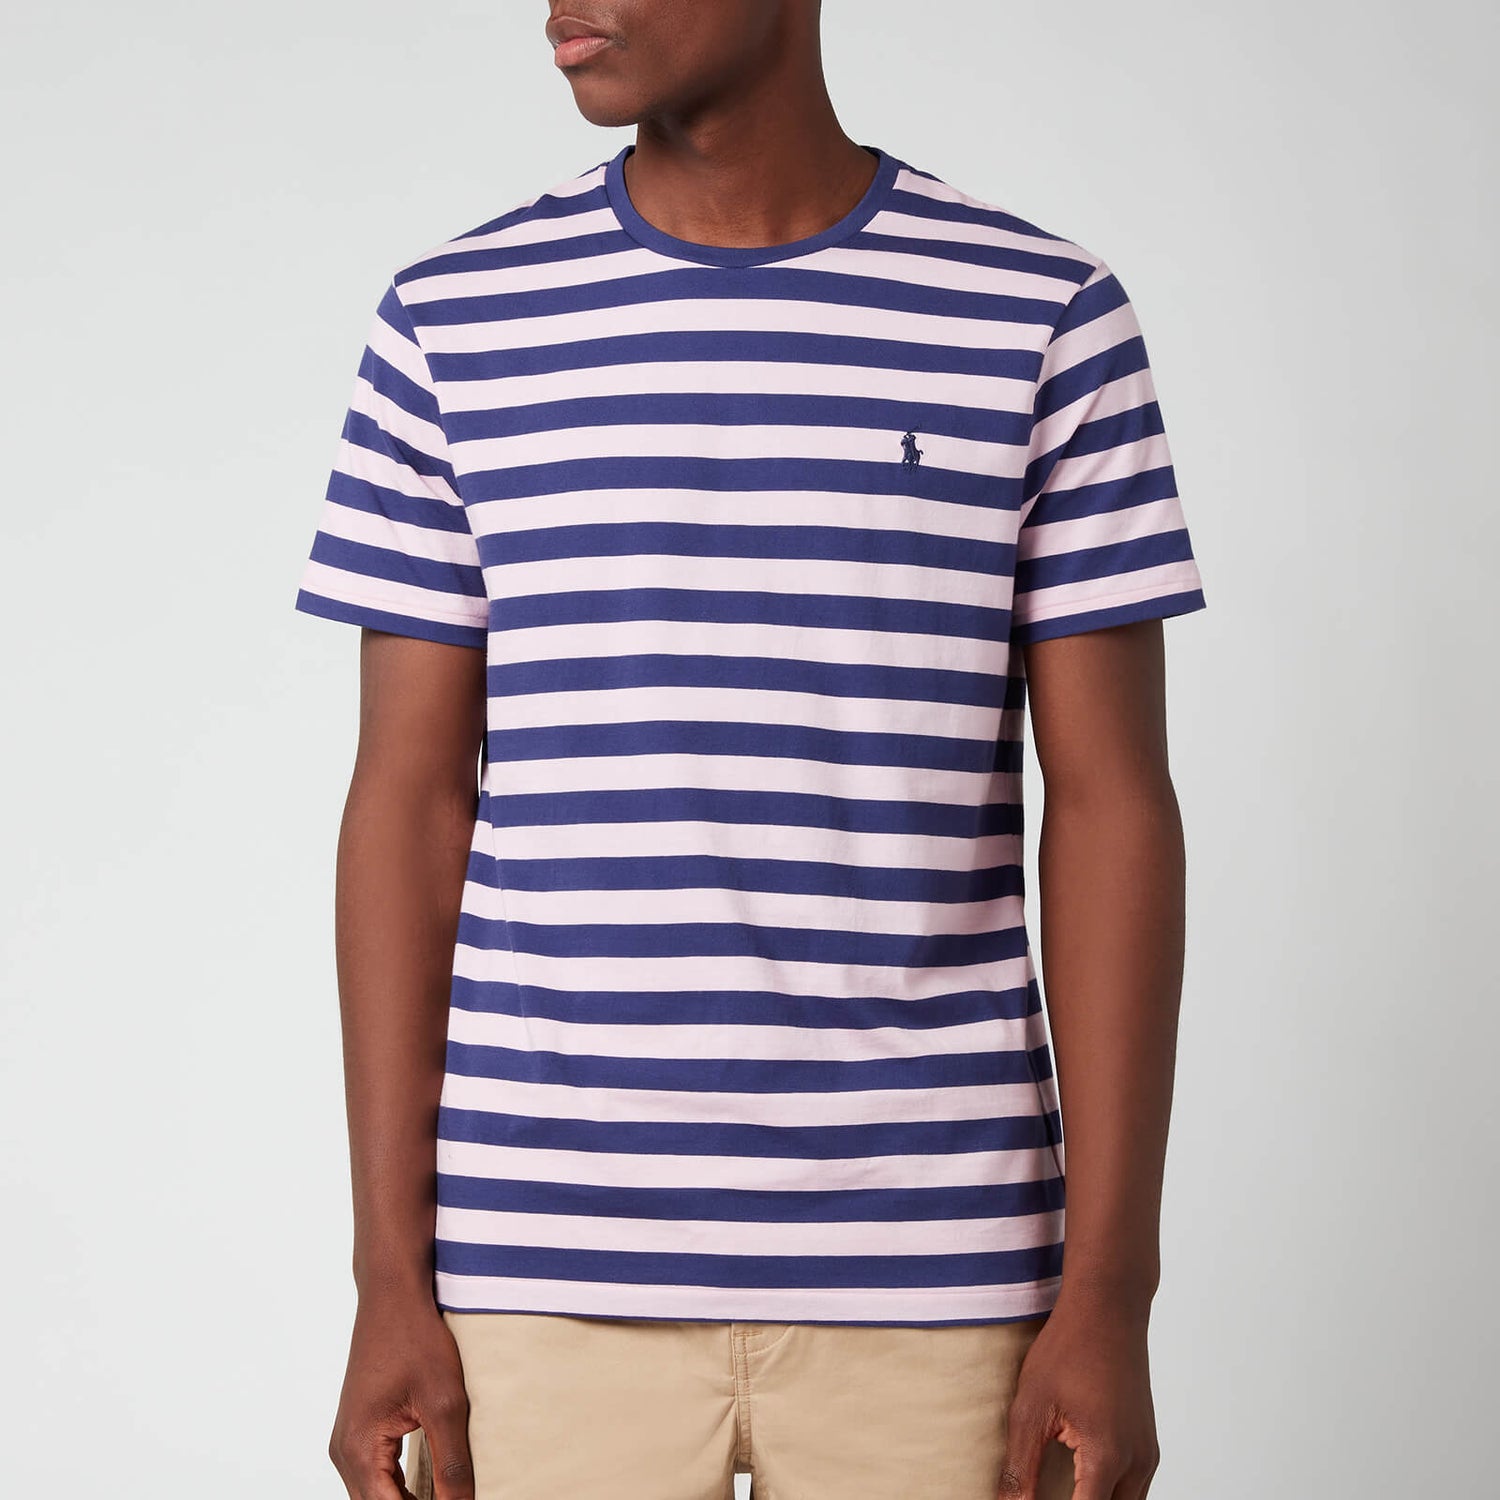 Polo Ralph Lauren Men's Jersey Stripe T-Shirt - Boathouse Navy/Garden Pink - M